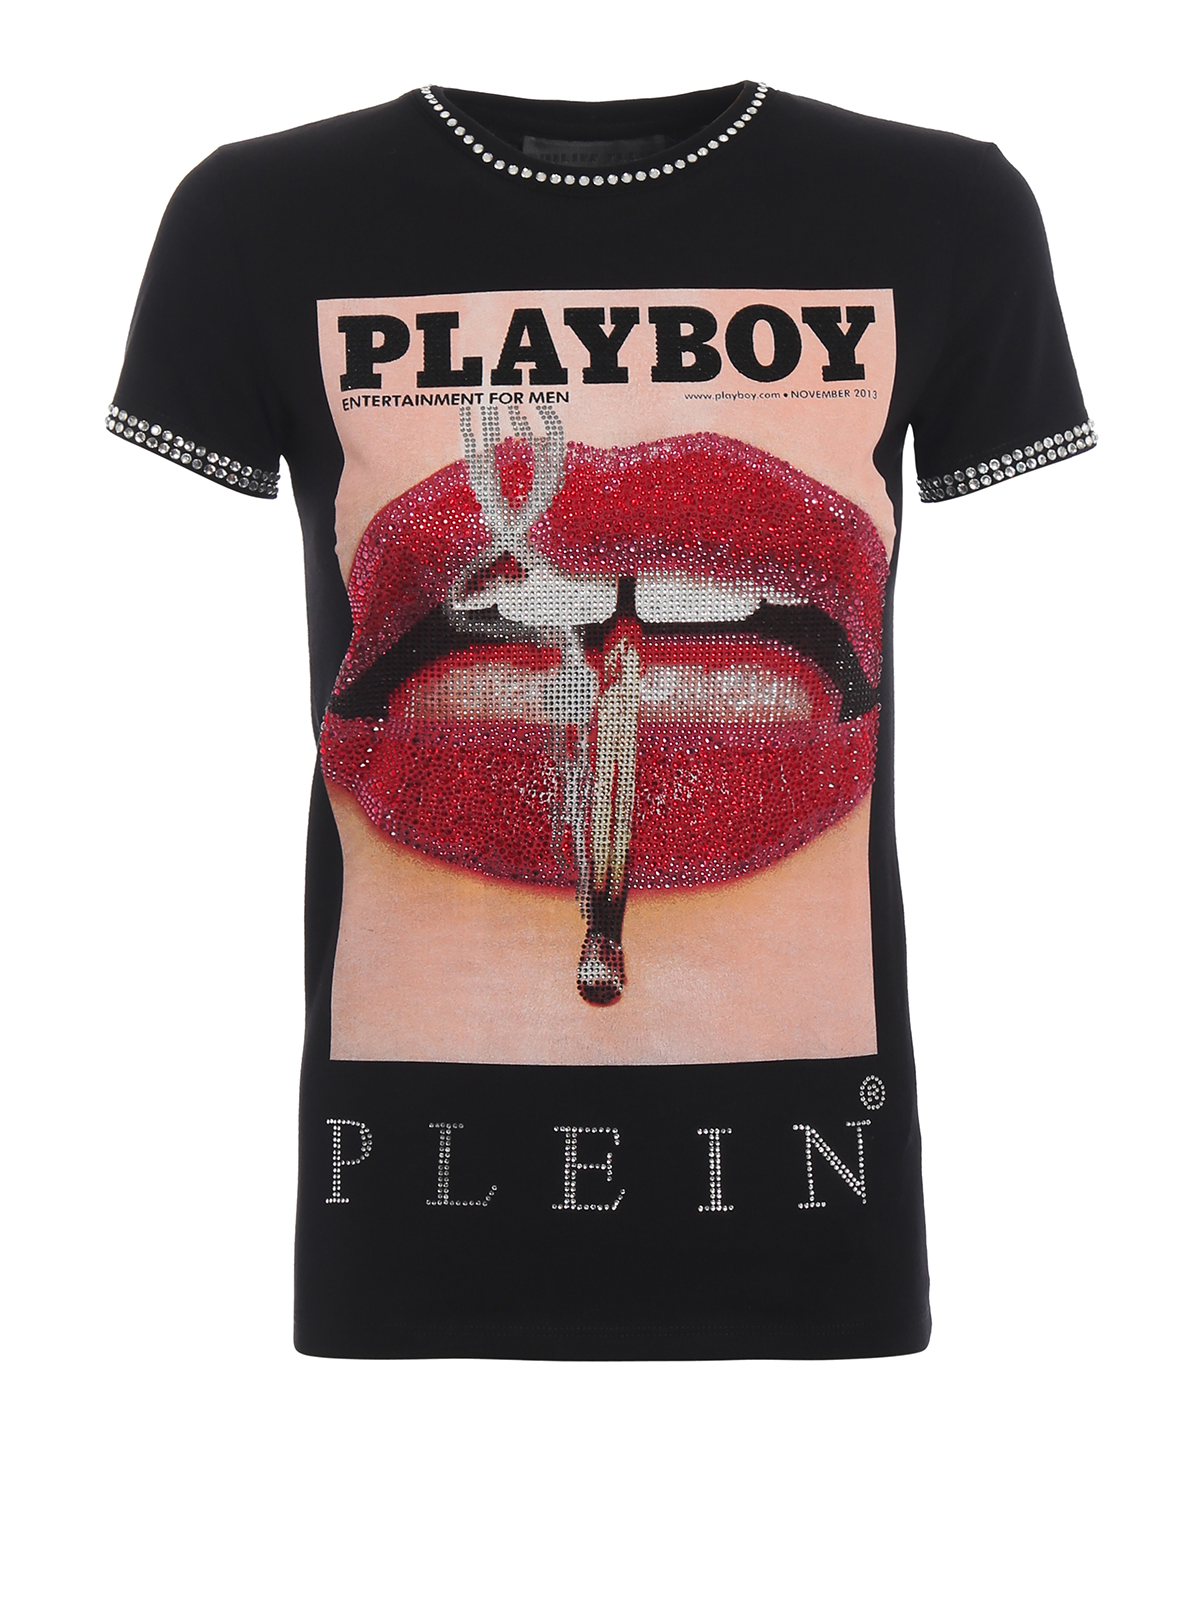 philipp plein t shirt playboy